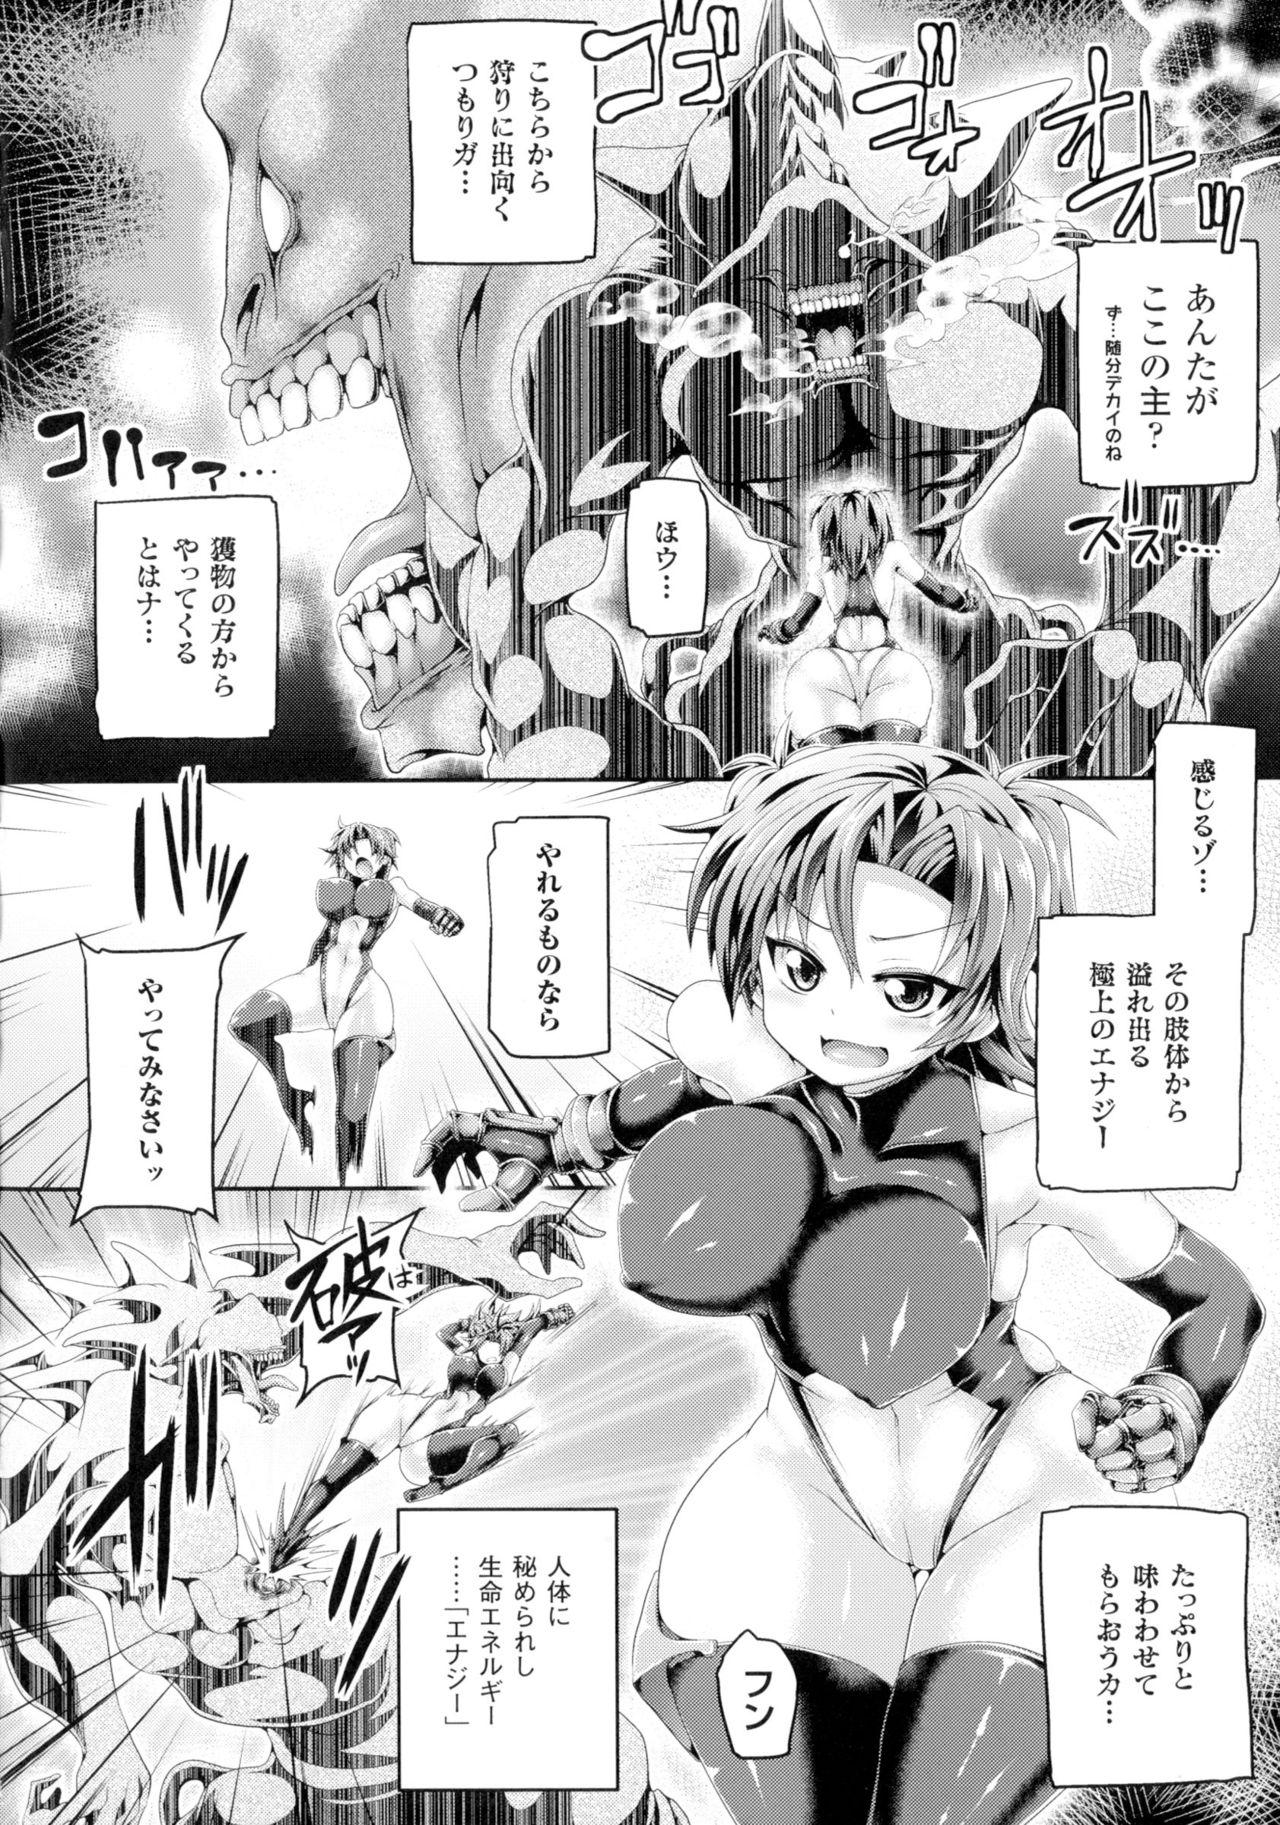 Seigi no Heroine Kangoku File DX Vol. 2 52